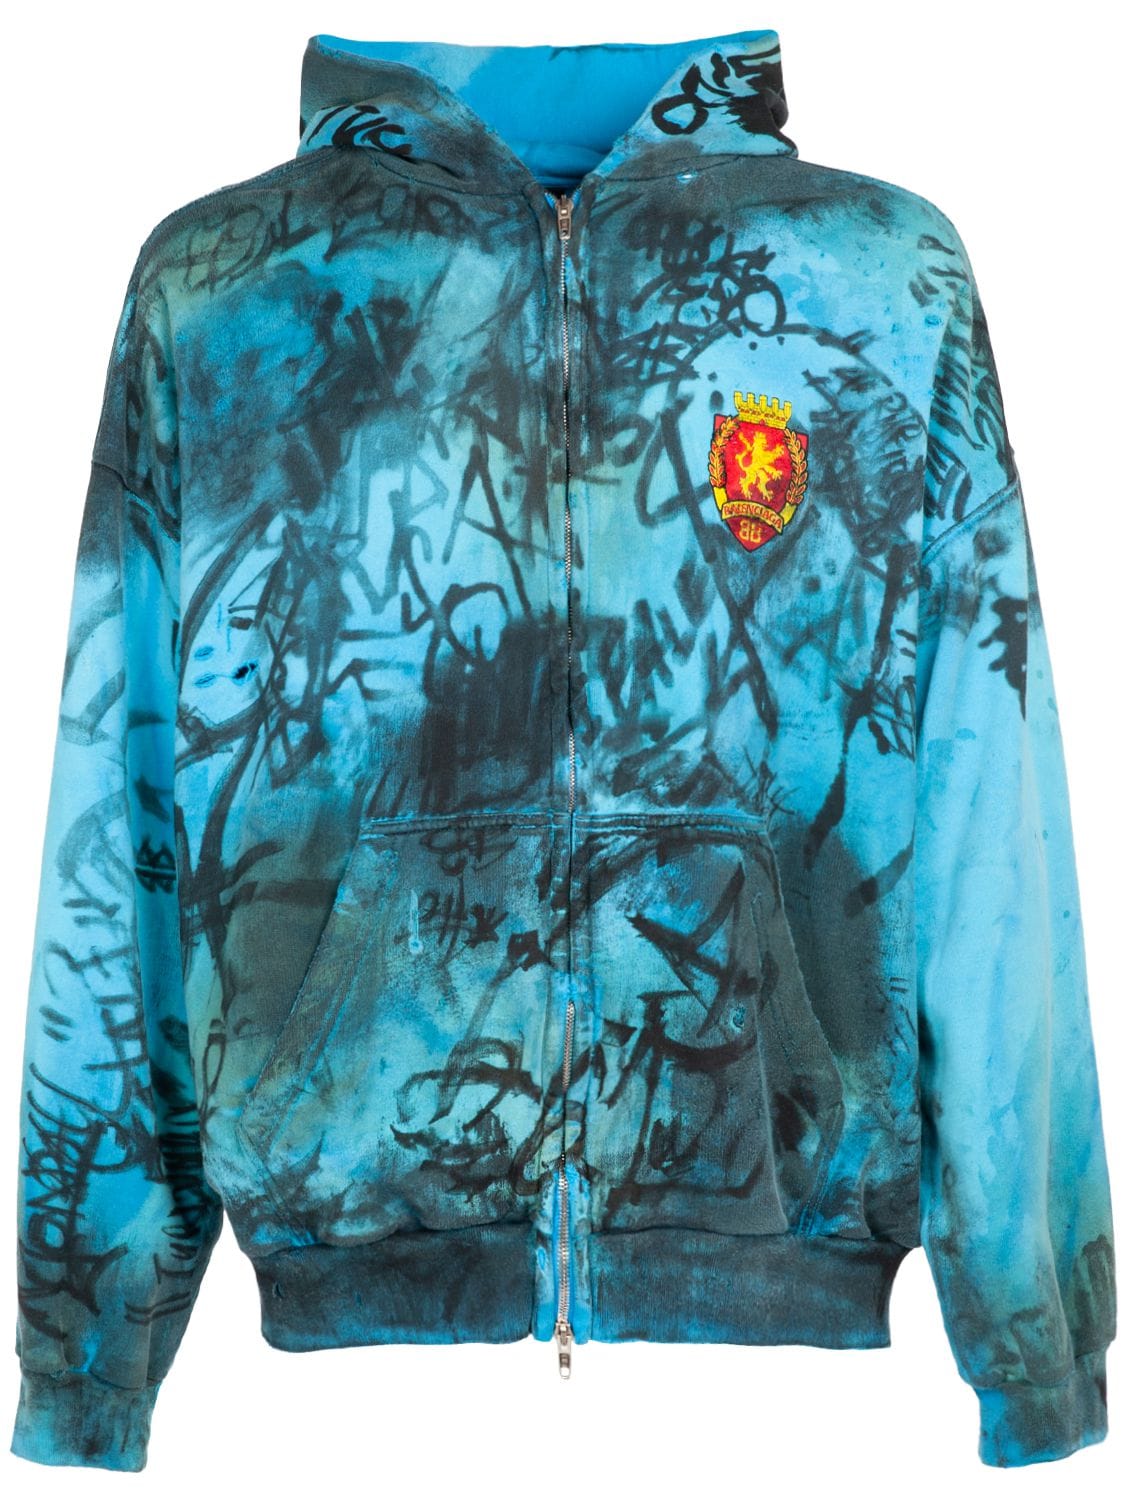 Distressed? Fashionistas may be at Balenciaga's £1,350 holey hoodie